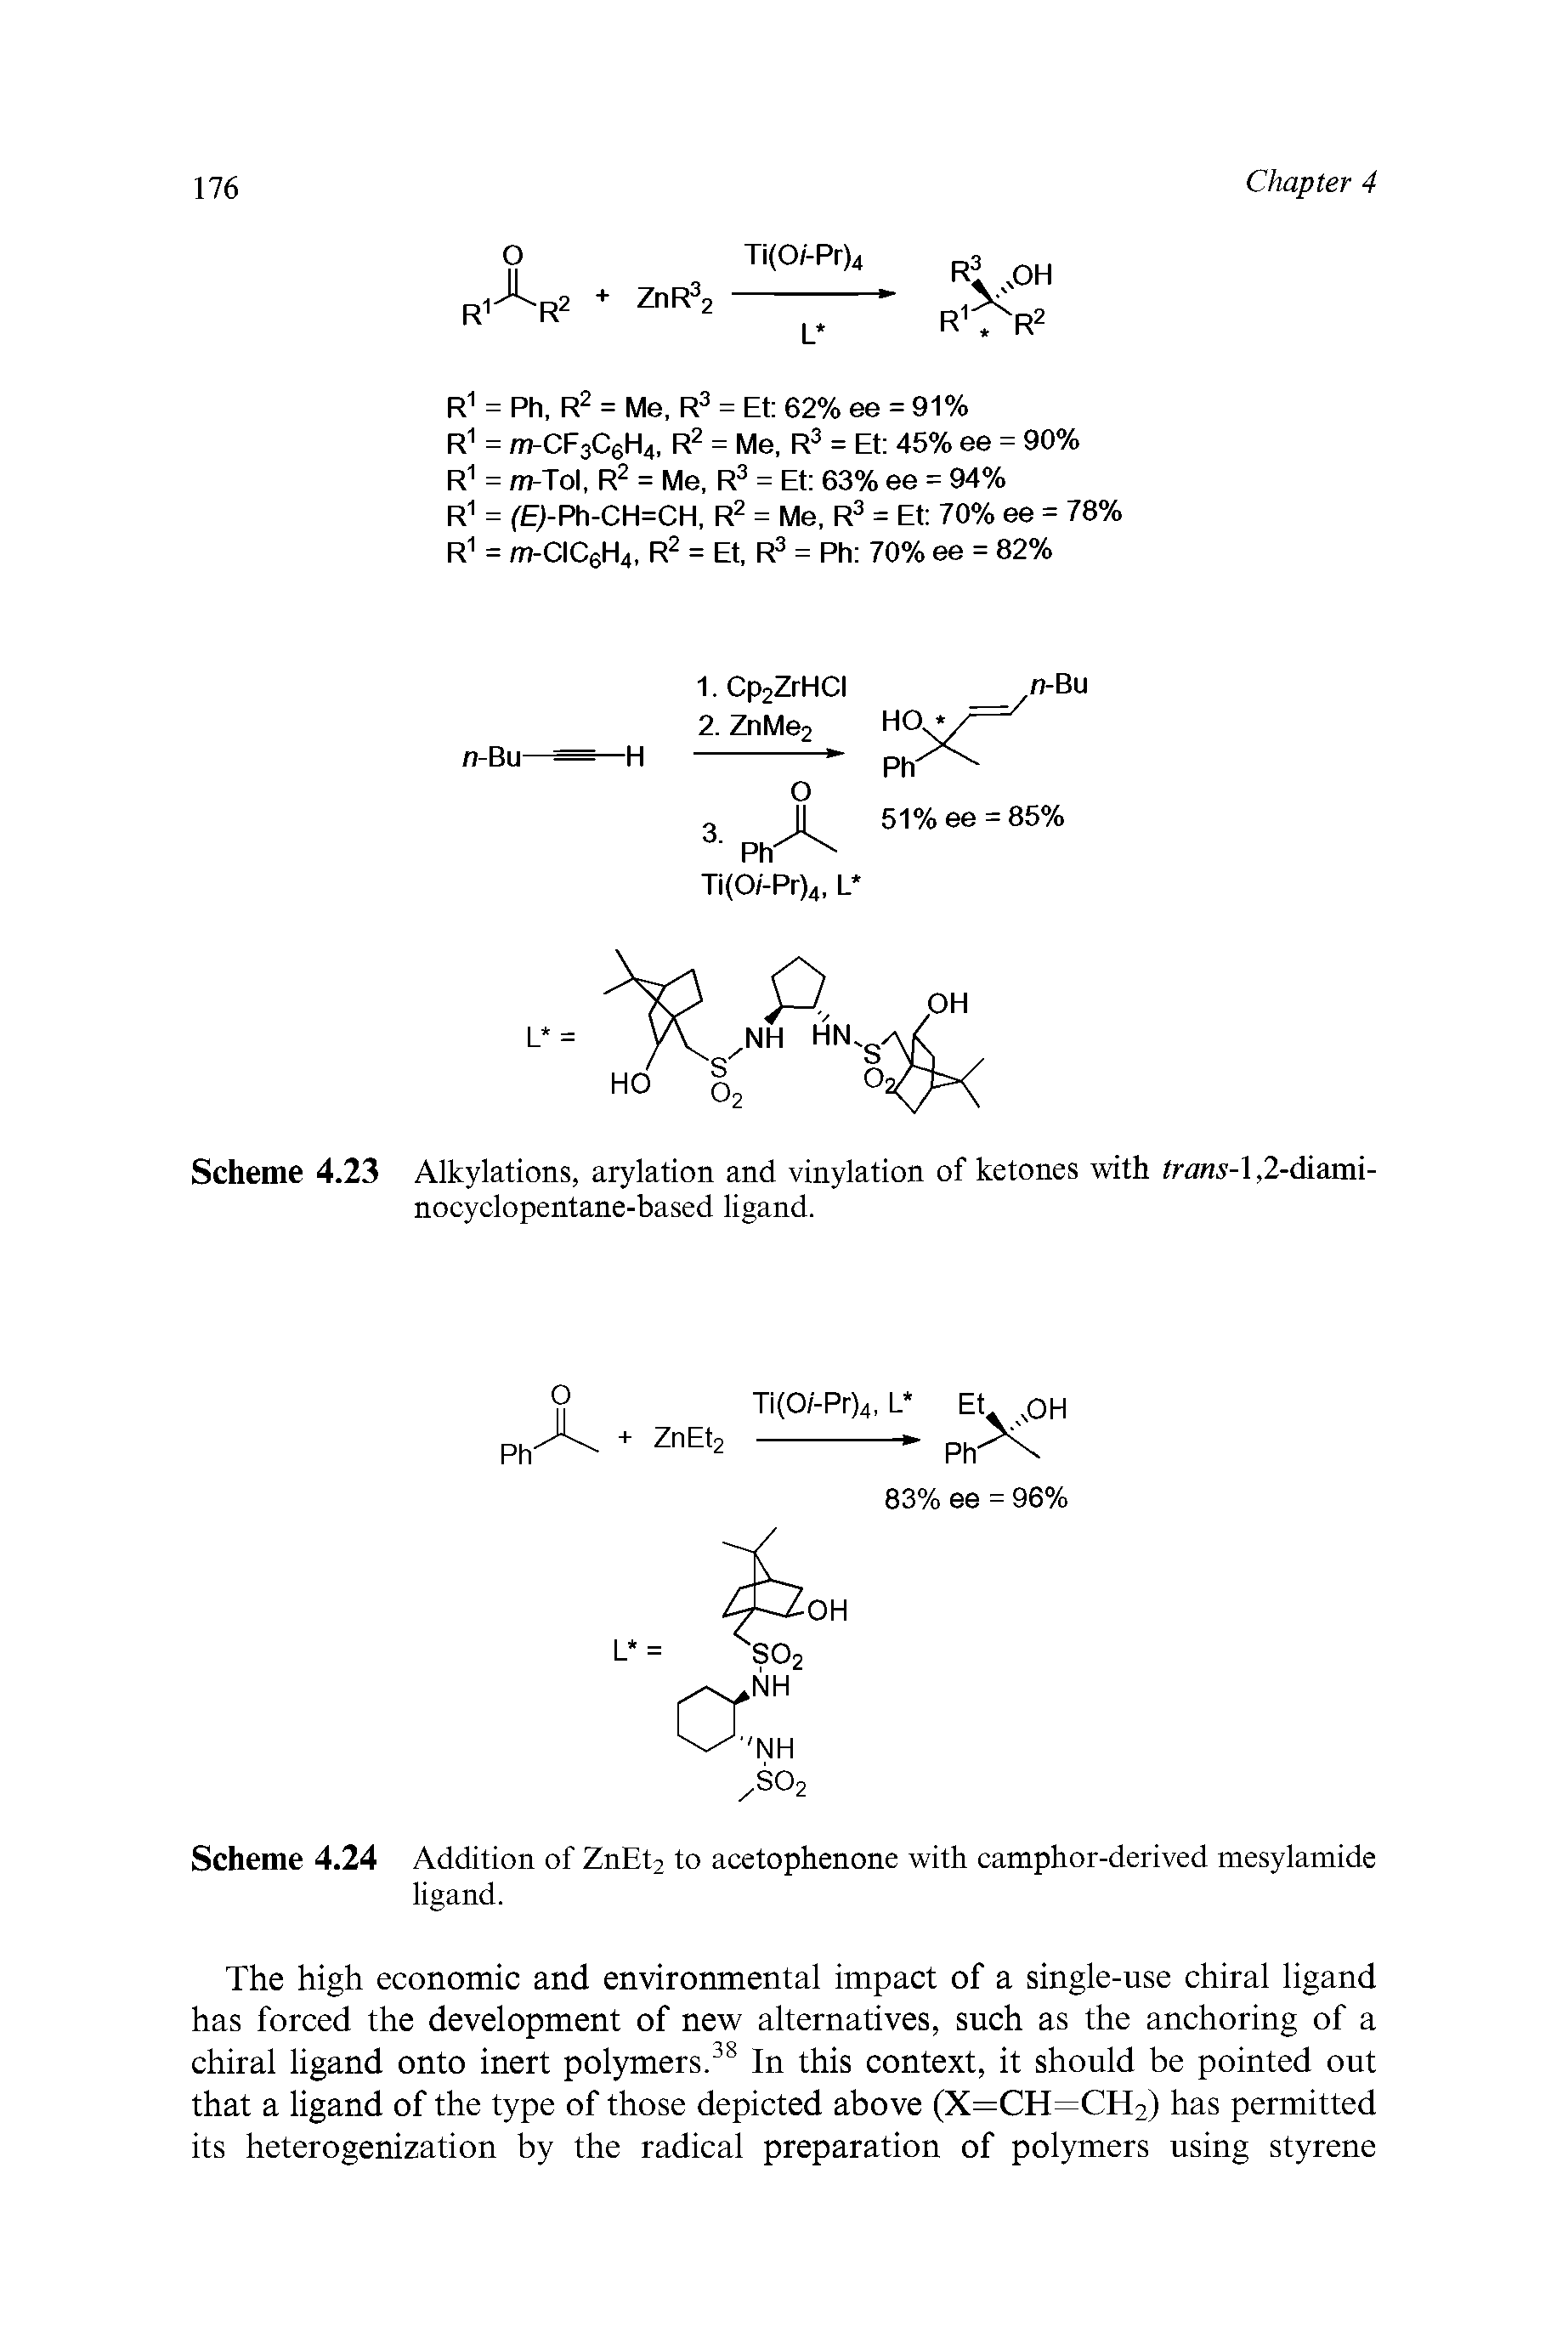 Scheme 4.23 Alkylations, arylation and vinylation of ketones with transA, 2-diami-nocyclopentane-based ligand.